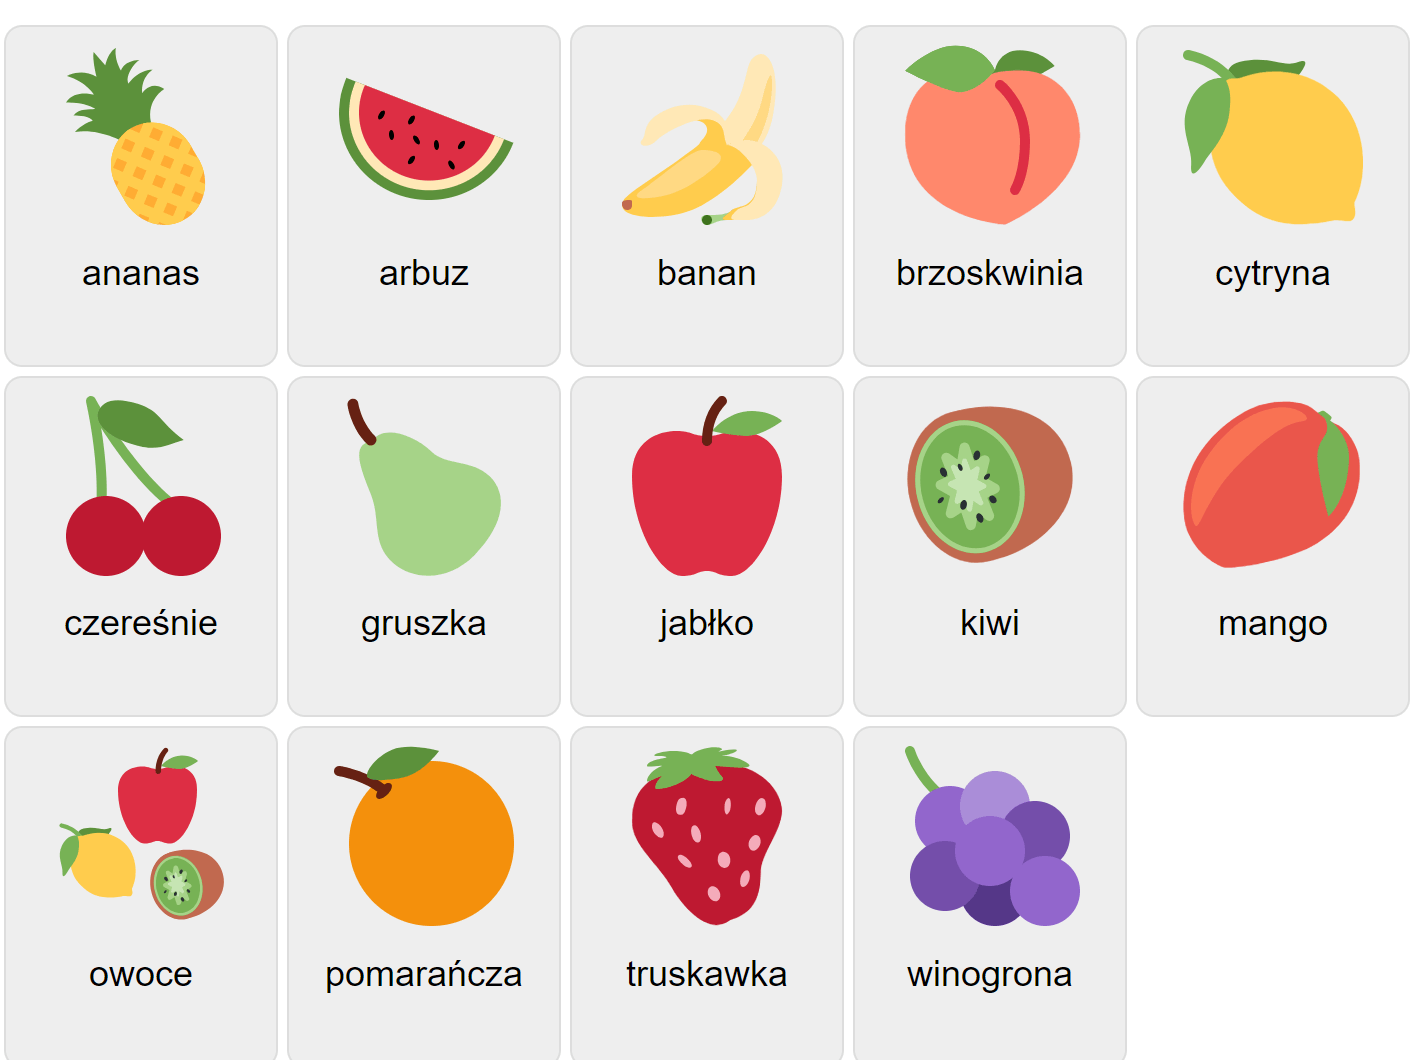 Fruits in Polish